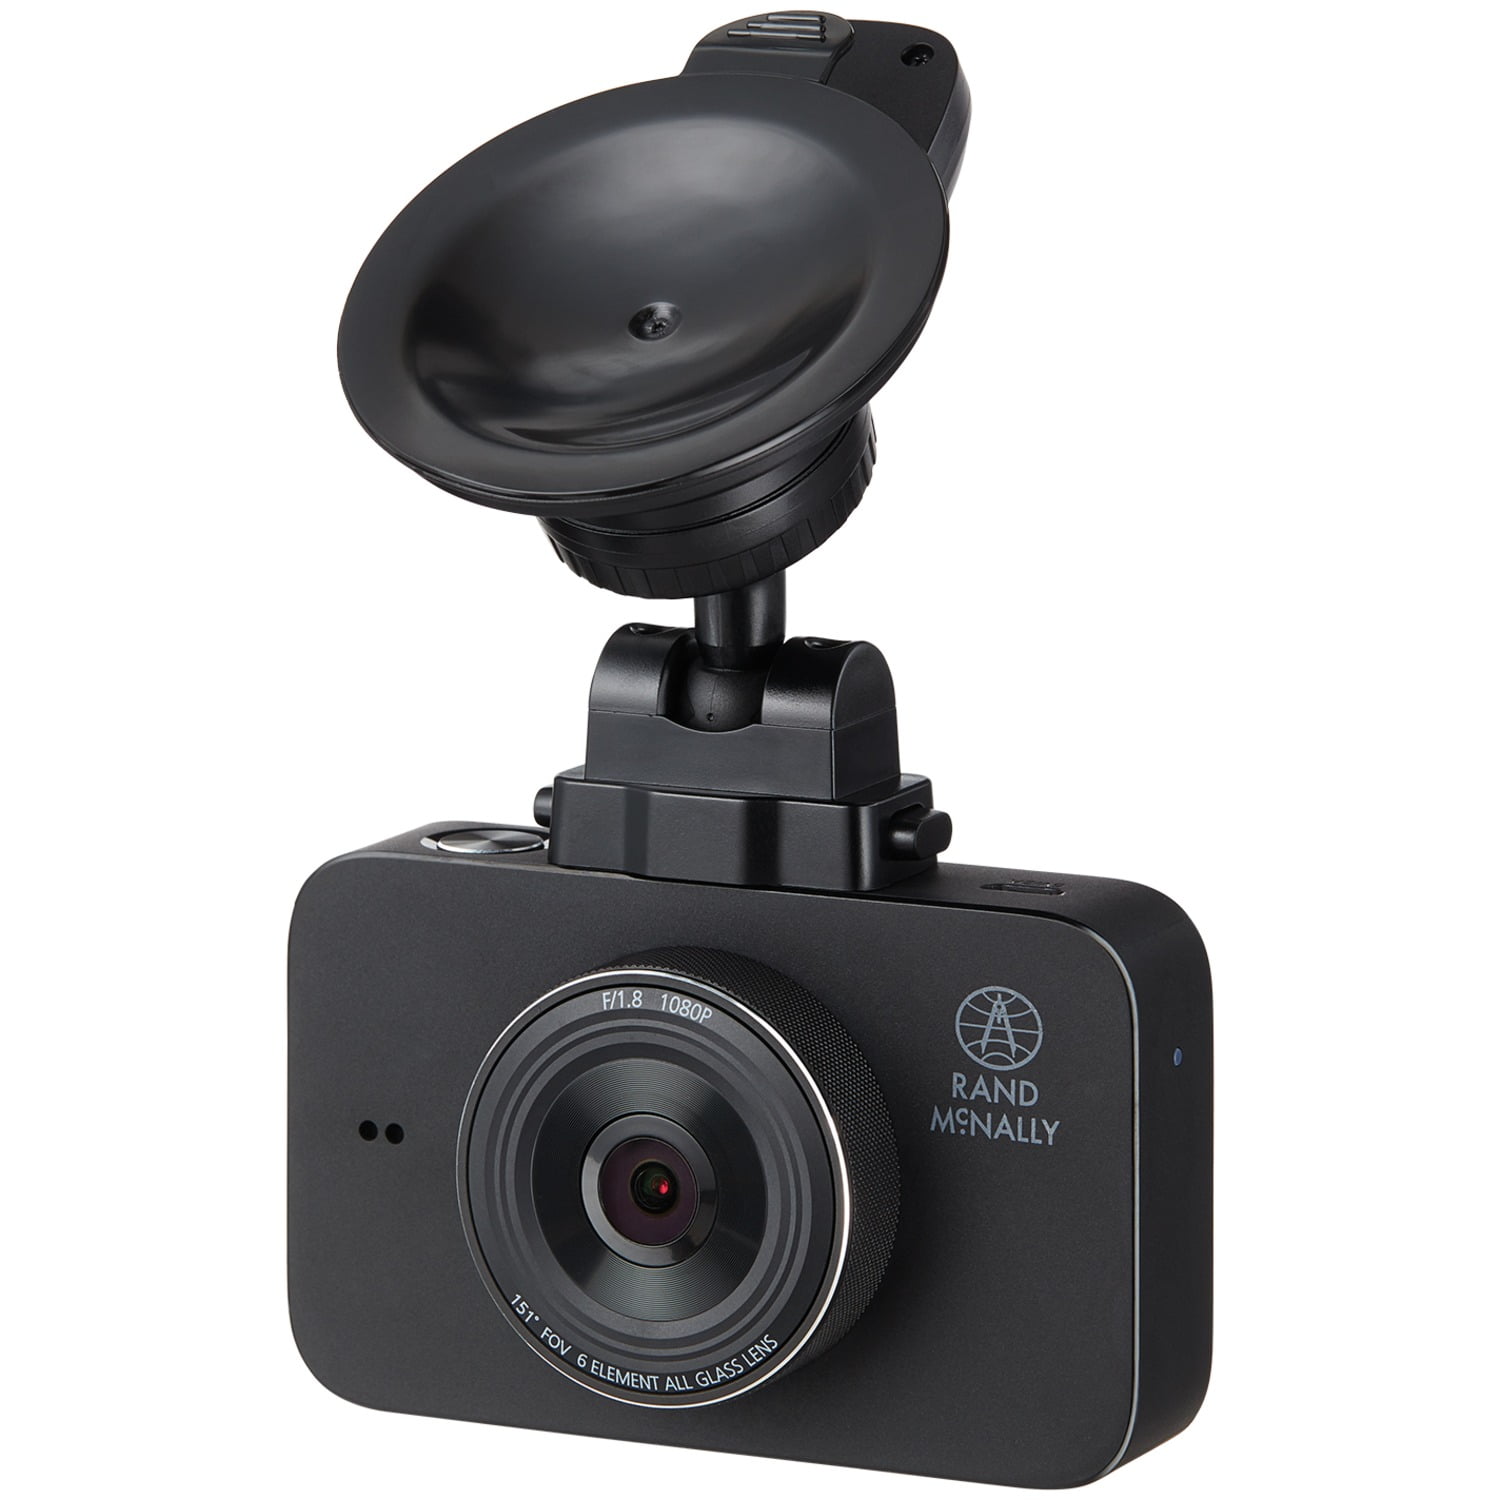 Wireless Automotive Security Cameras : DashCam 500